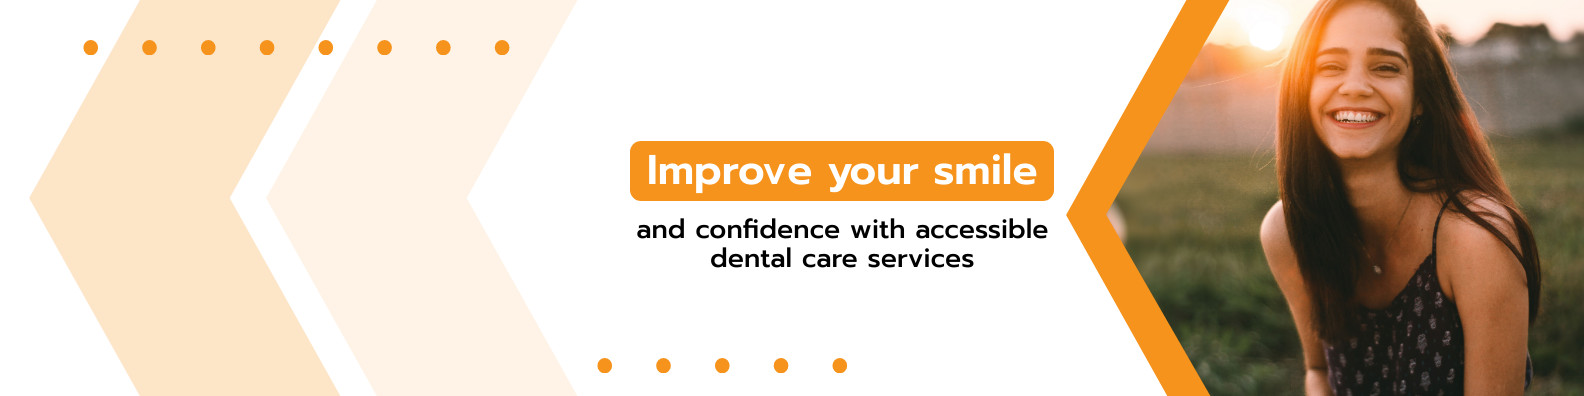 Improve Your Smile Dental Care Linkedin Profile BG Linkedin Profile Background 1584x396